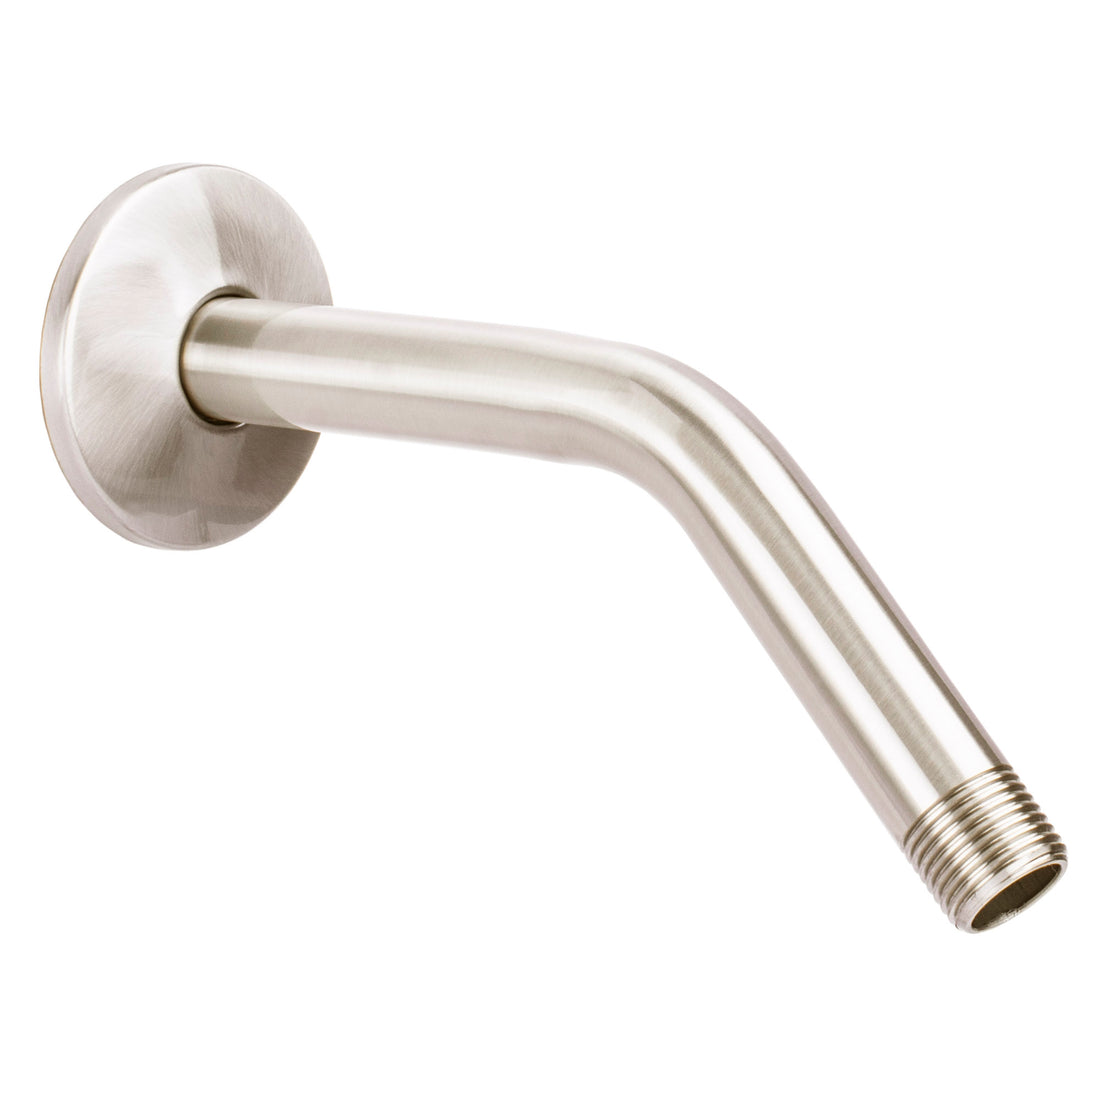 8 in. Stainless Steel Shower Head Extension Arm with Flange (Brushed Nickel Finish) - Utility sinks vanites Tehila